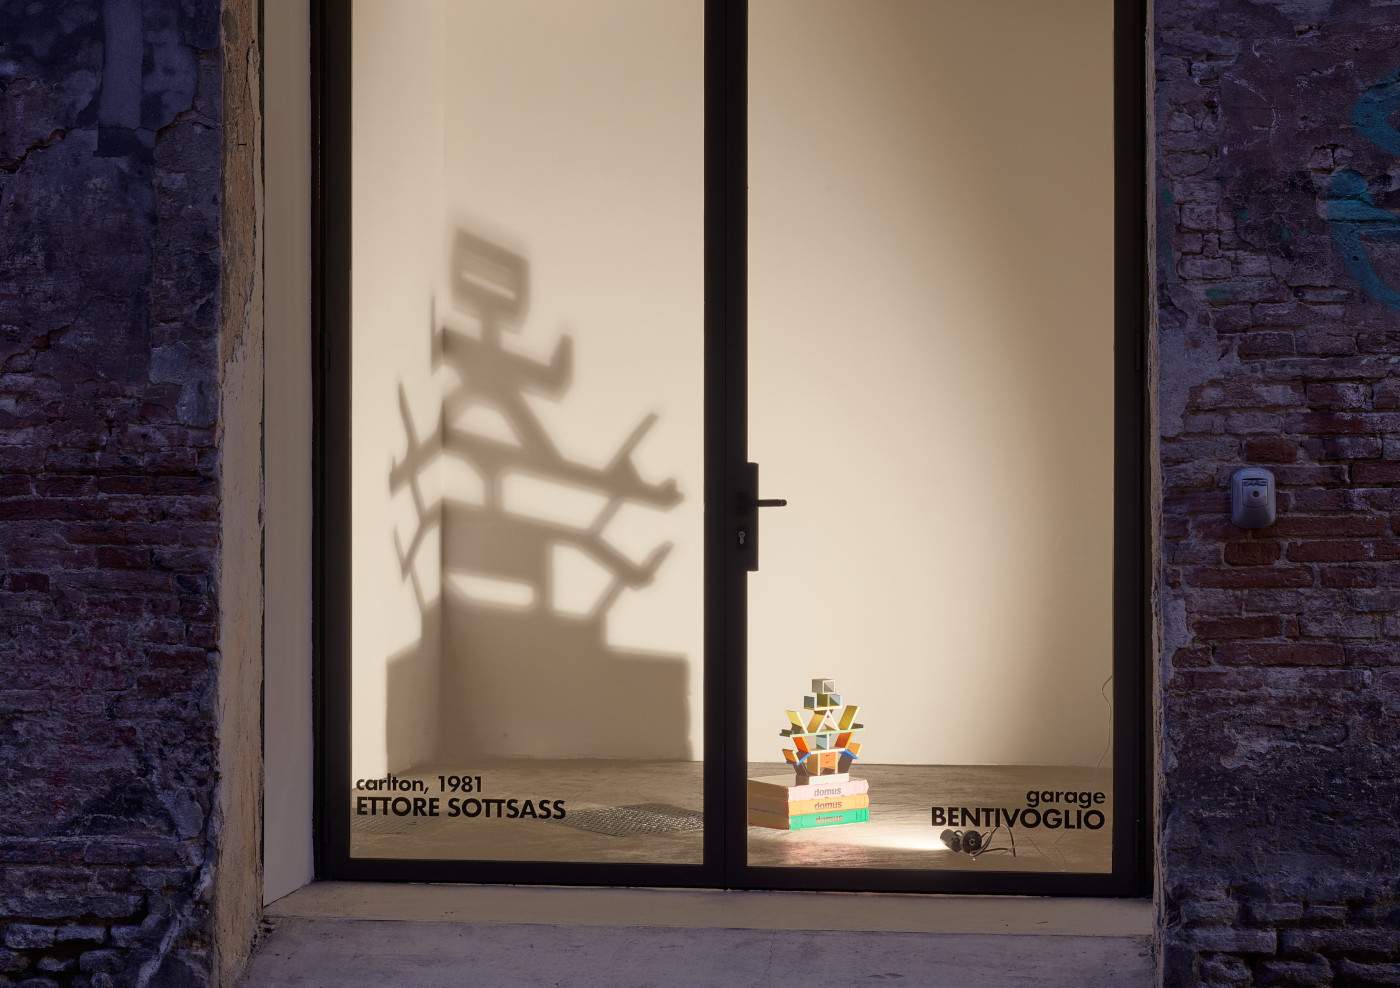 In Bologna, Bentivoglio garage window displays miniature of Ettore Sottsass's Carlton bookstore